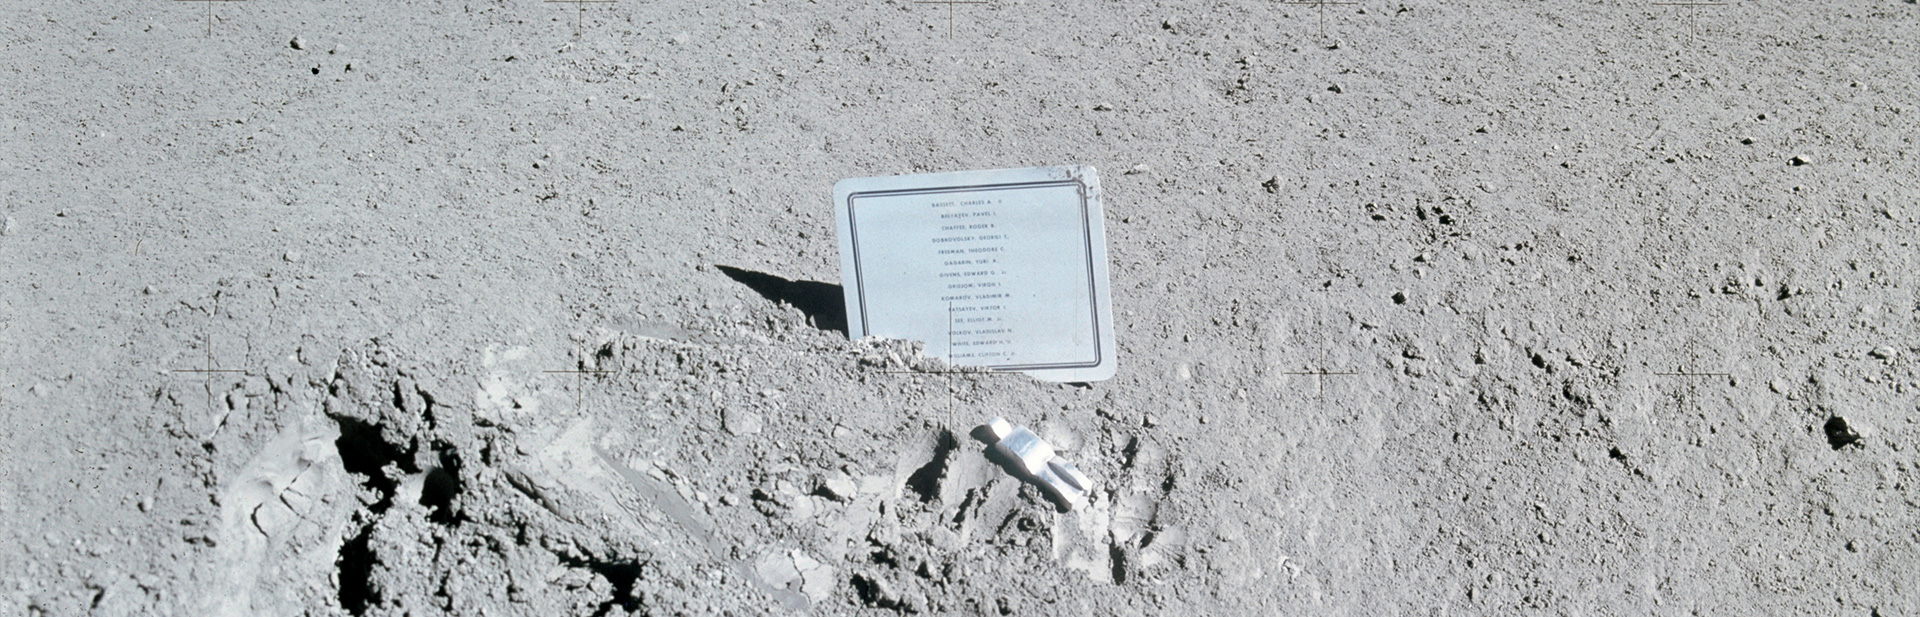 The Fallen Astronaut, a small human shaped figurine designed by Belgian artist Paul Van Hoeydonk